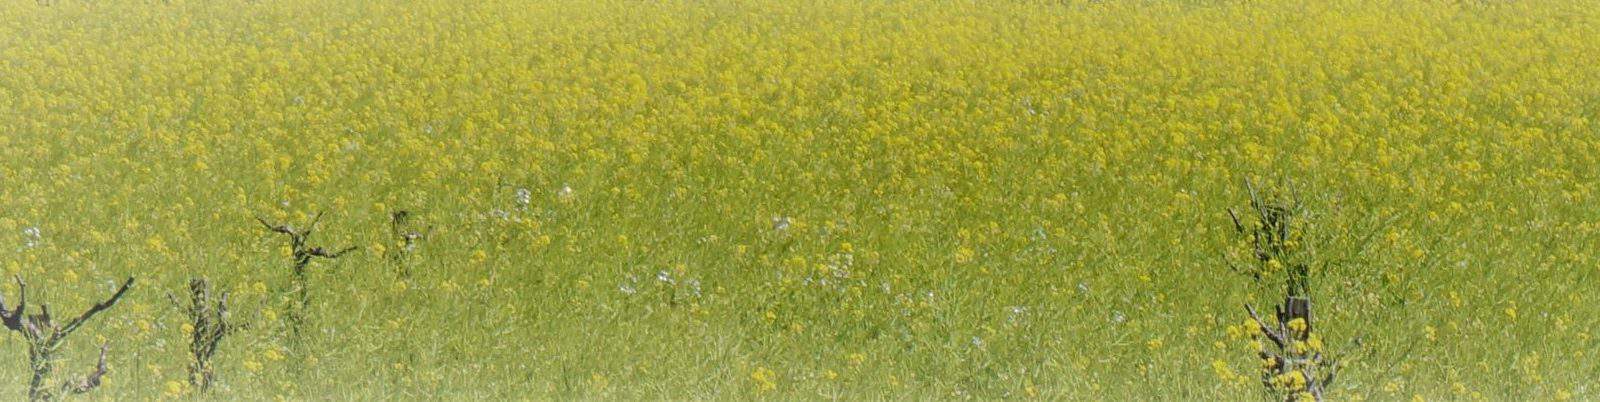 mustard flowers among the vineyards